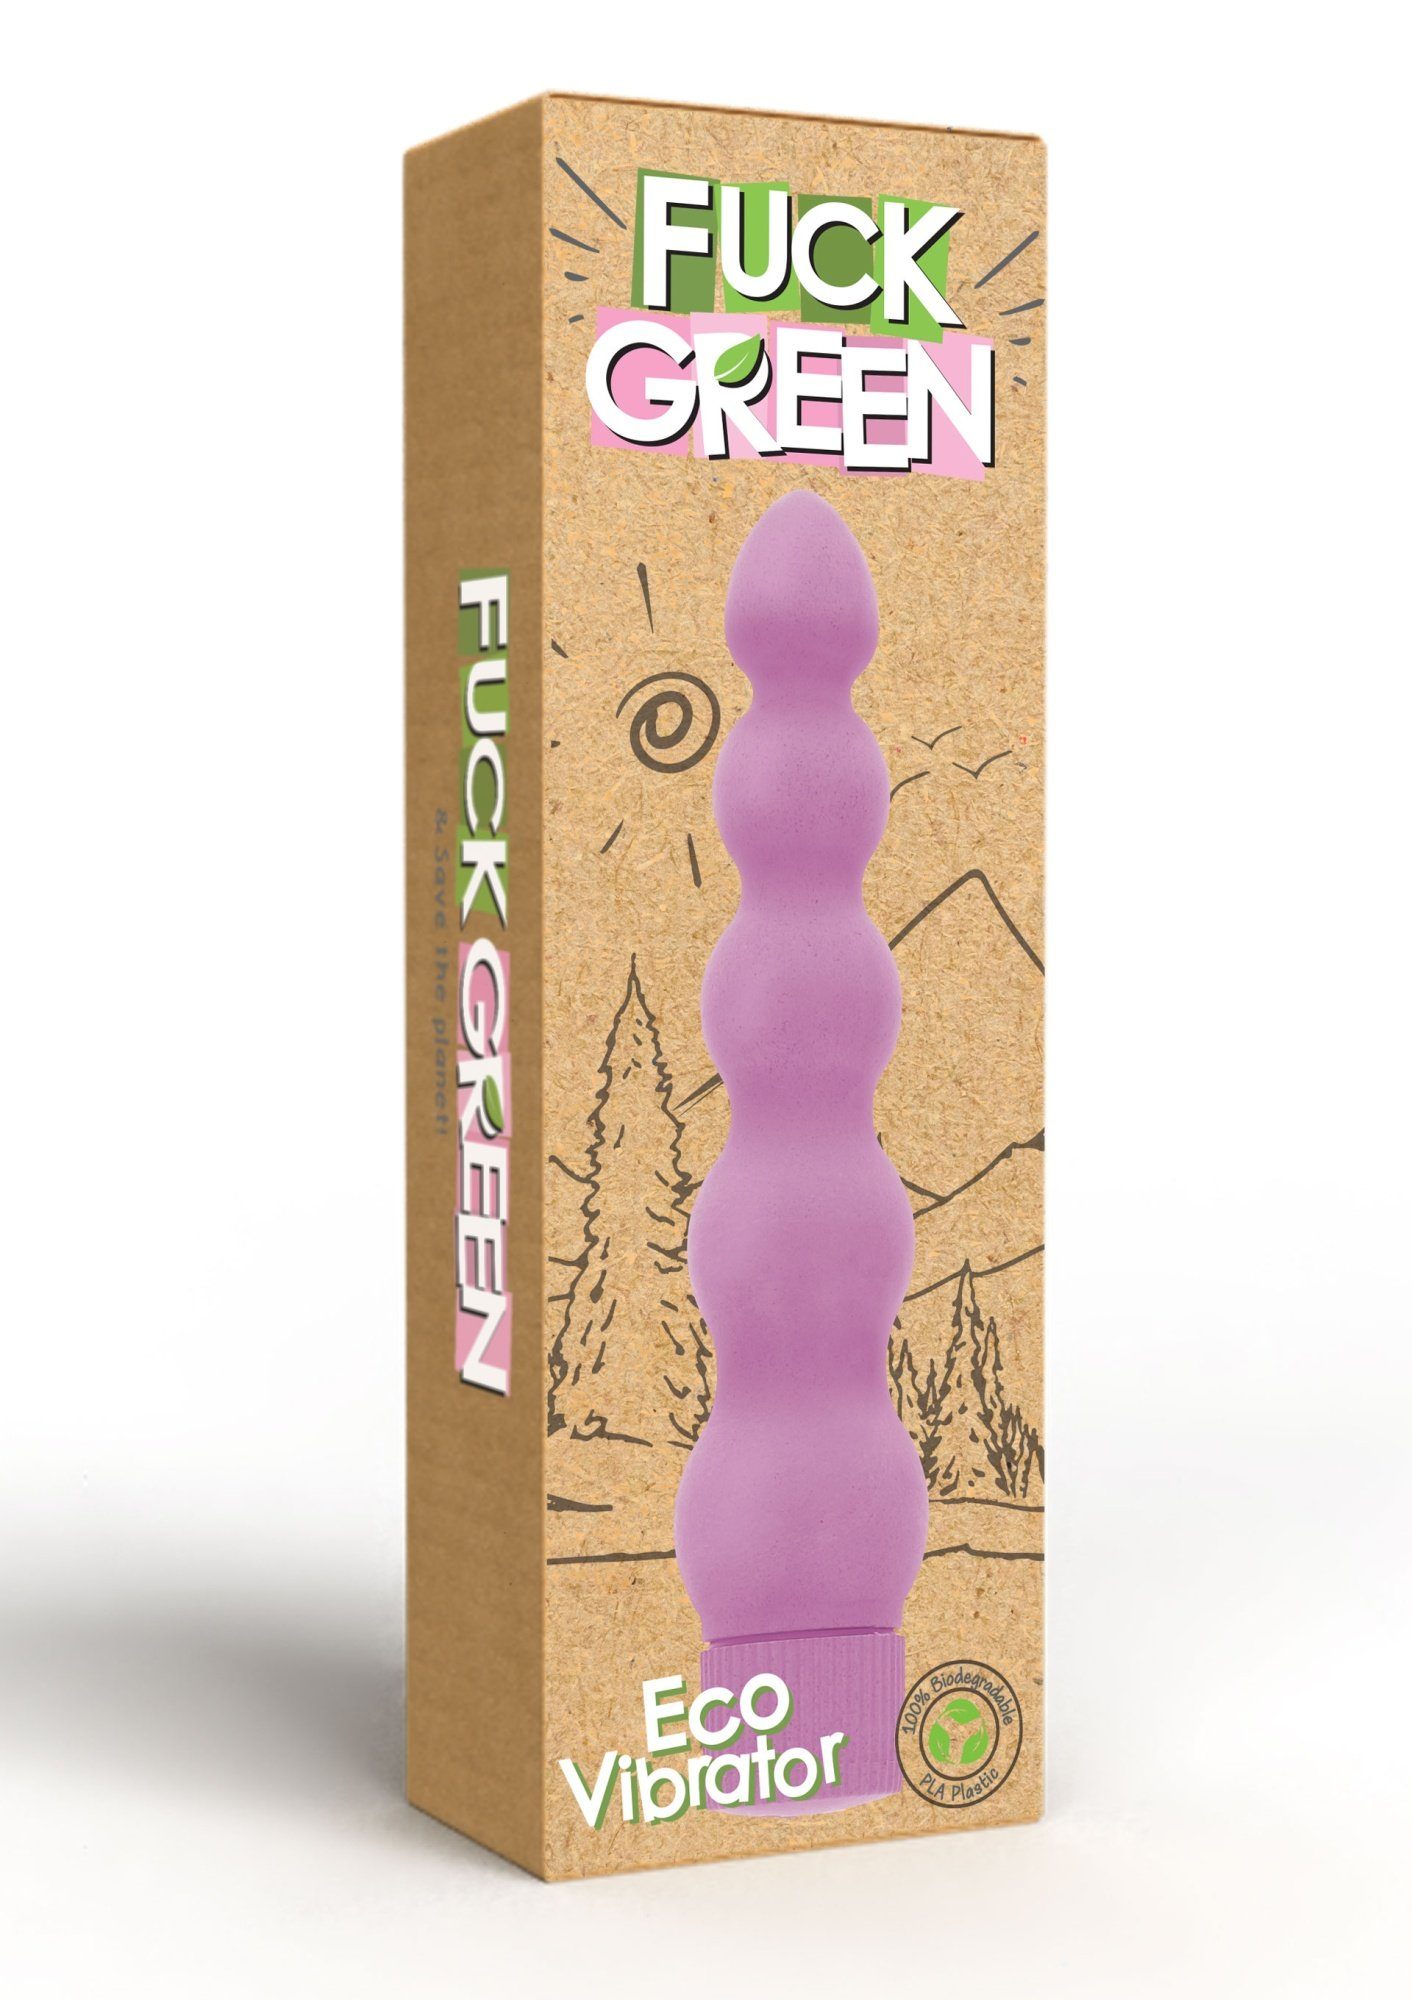 % rosa 100 vegan GREEN FUCK biologisch Vibrator abbaubar - Vibrator